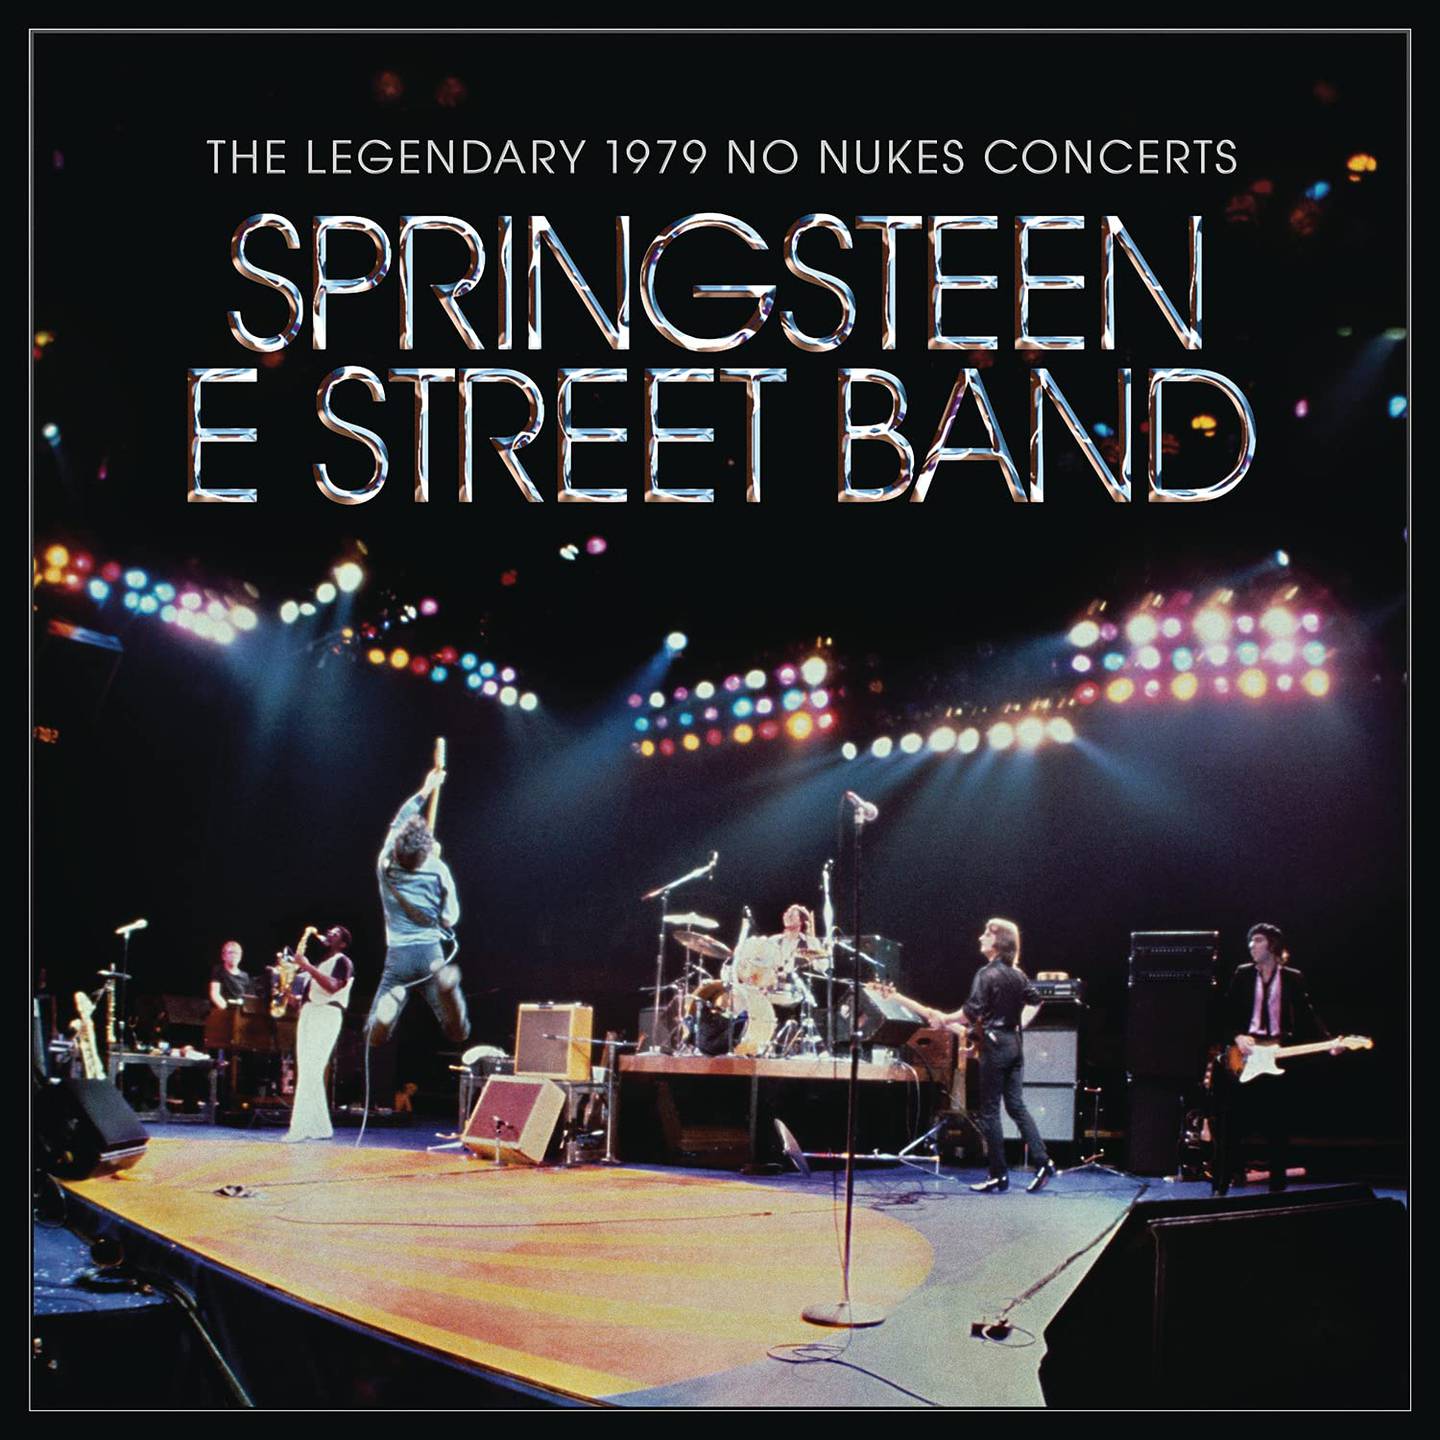 Bruce Springsteen & E Street Band: The Legendary No Nukes Concert